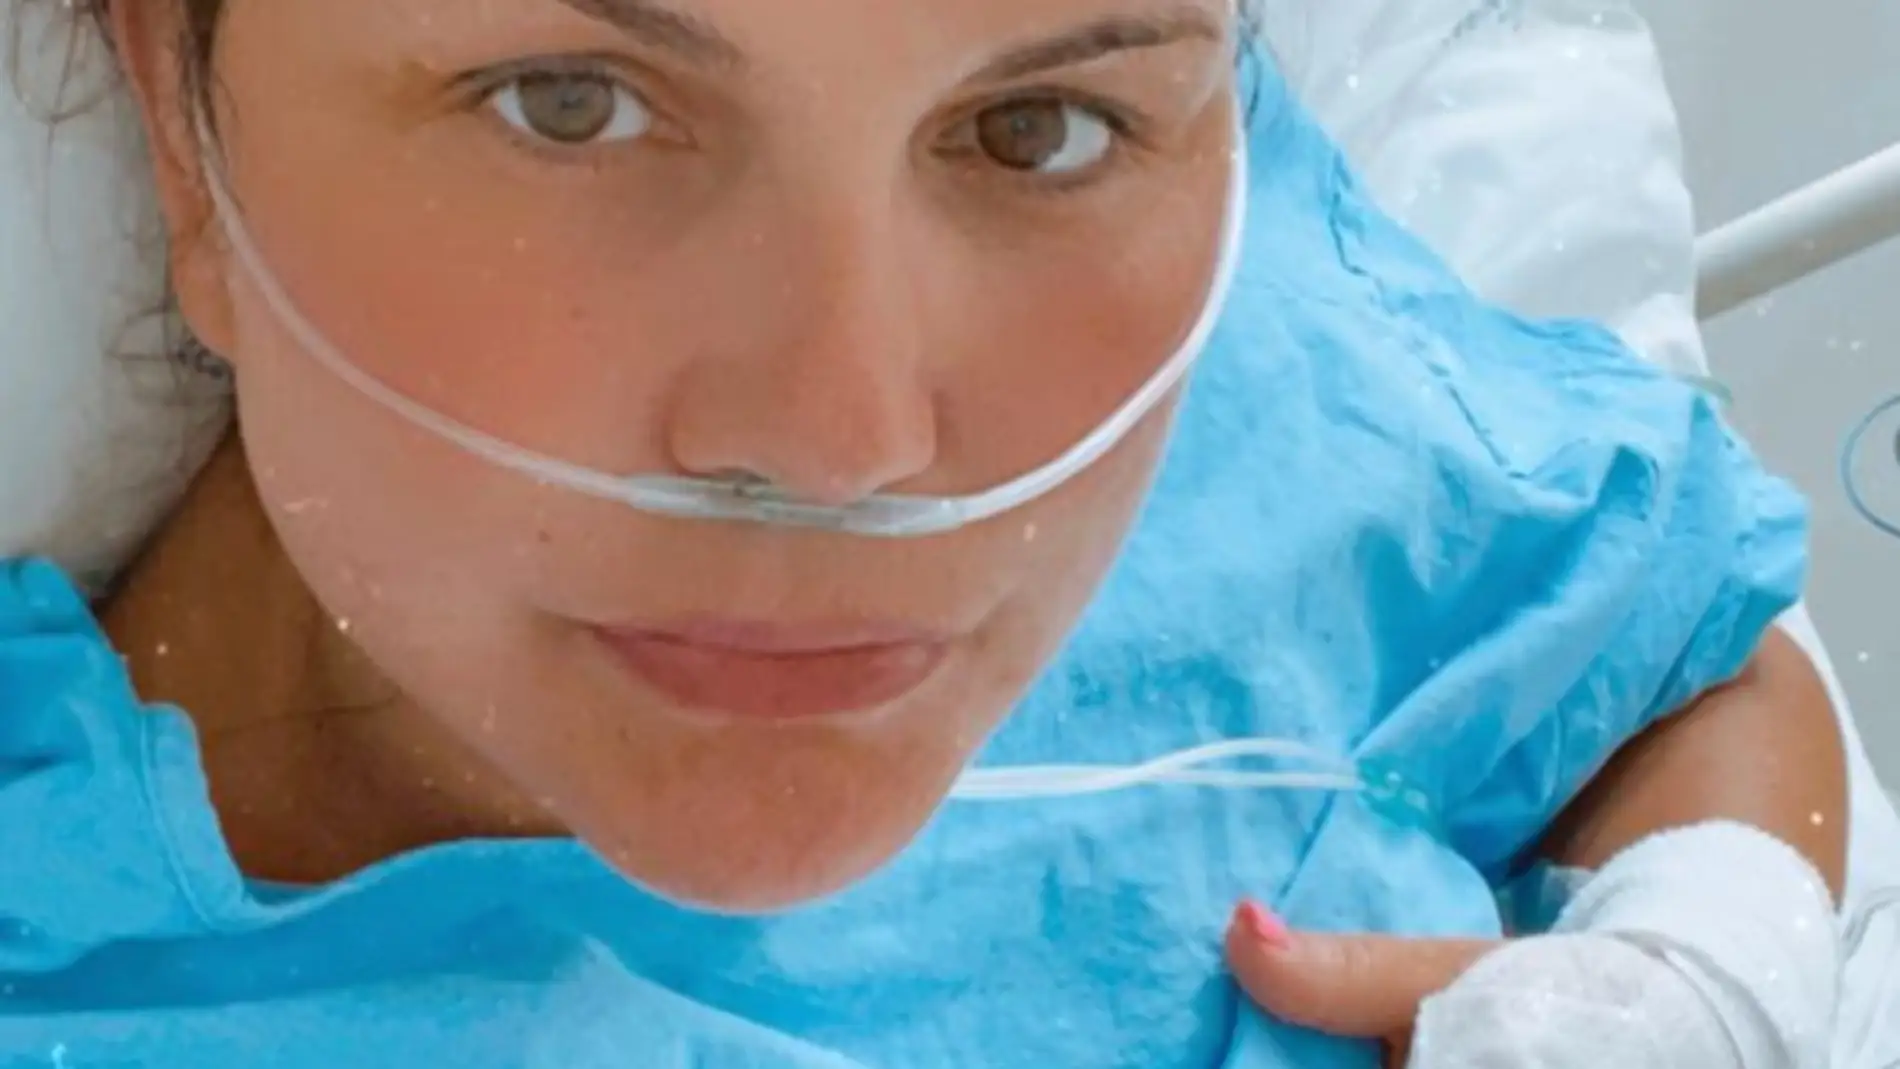 Katia Aveiro, hermana de Cristiano Ronaldo, está ingresada en el hospital por coronavirus